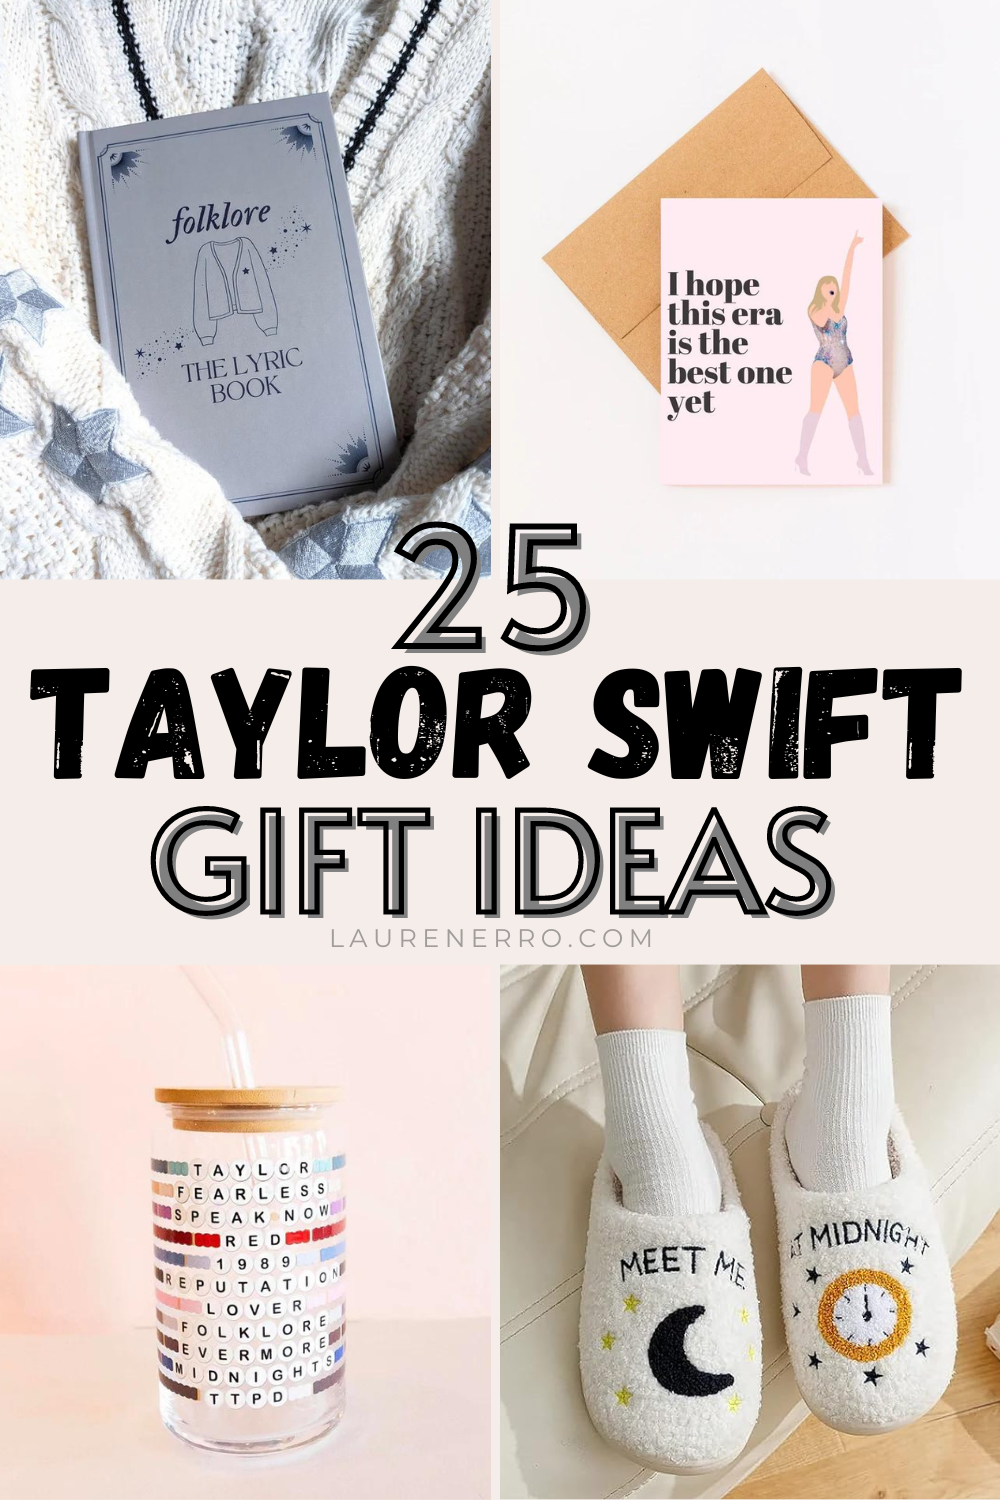 25 Taylor Swift Gift Ideas - Lauren Erro